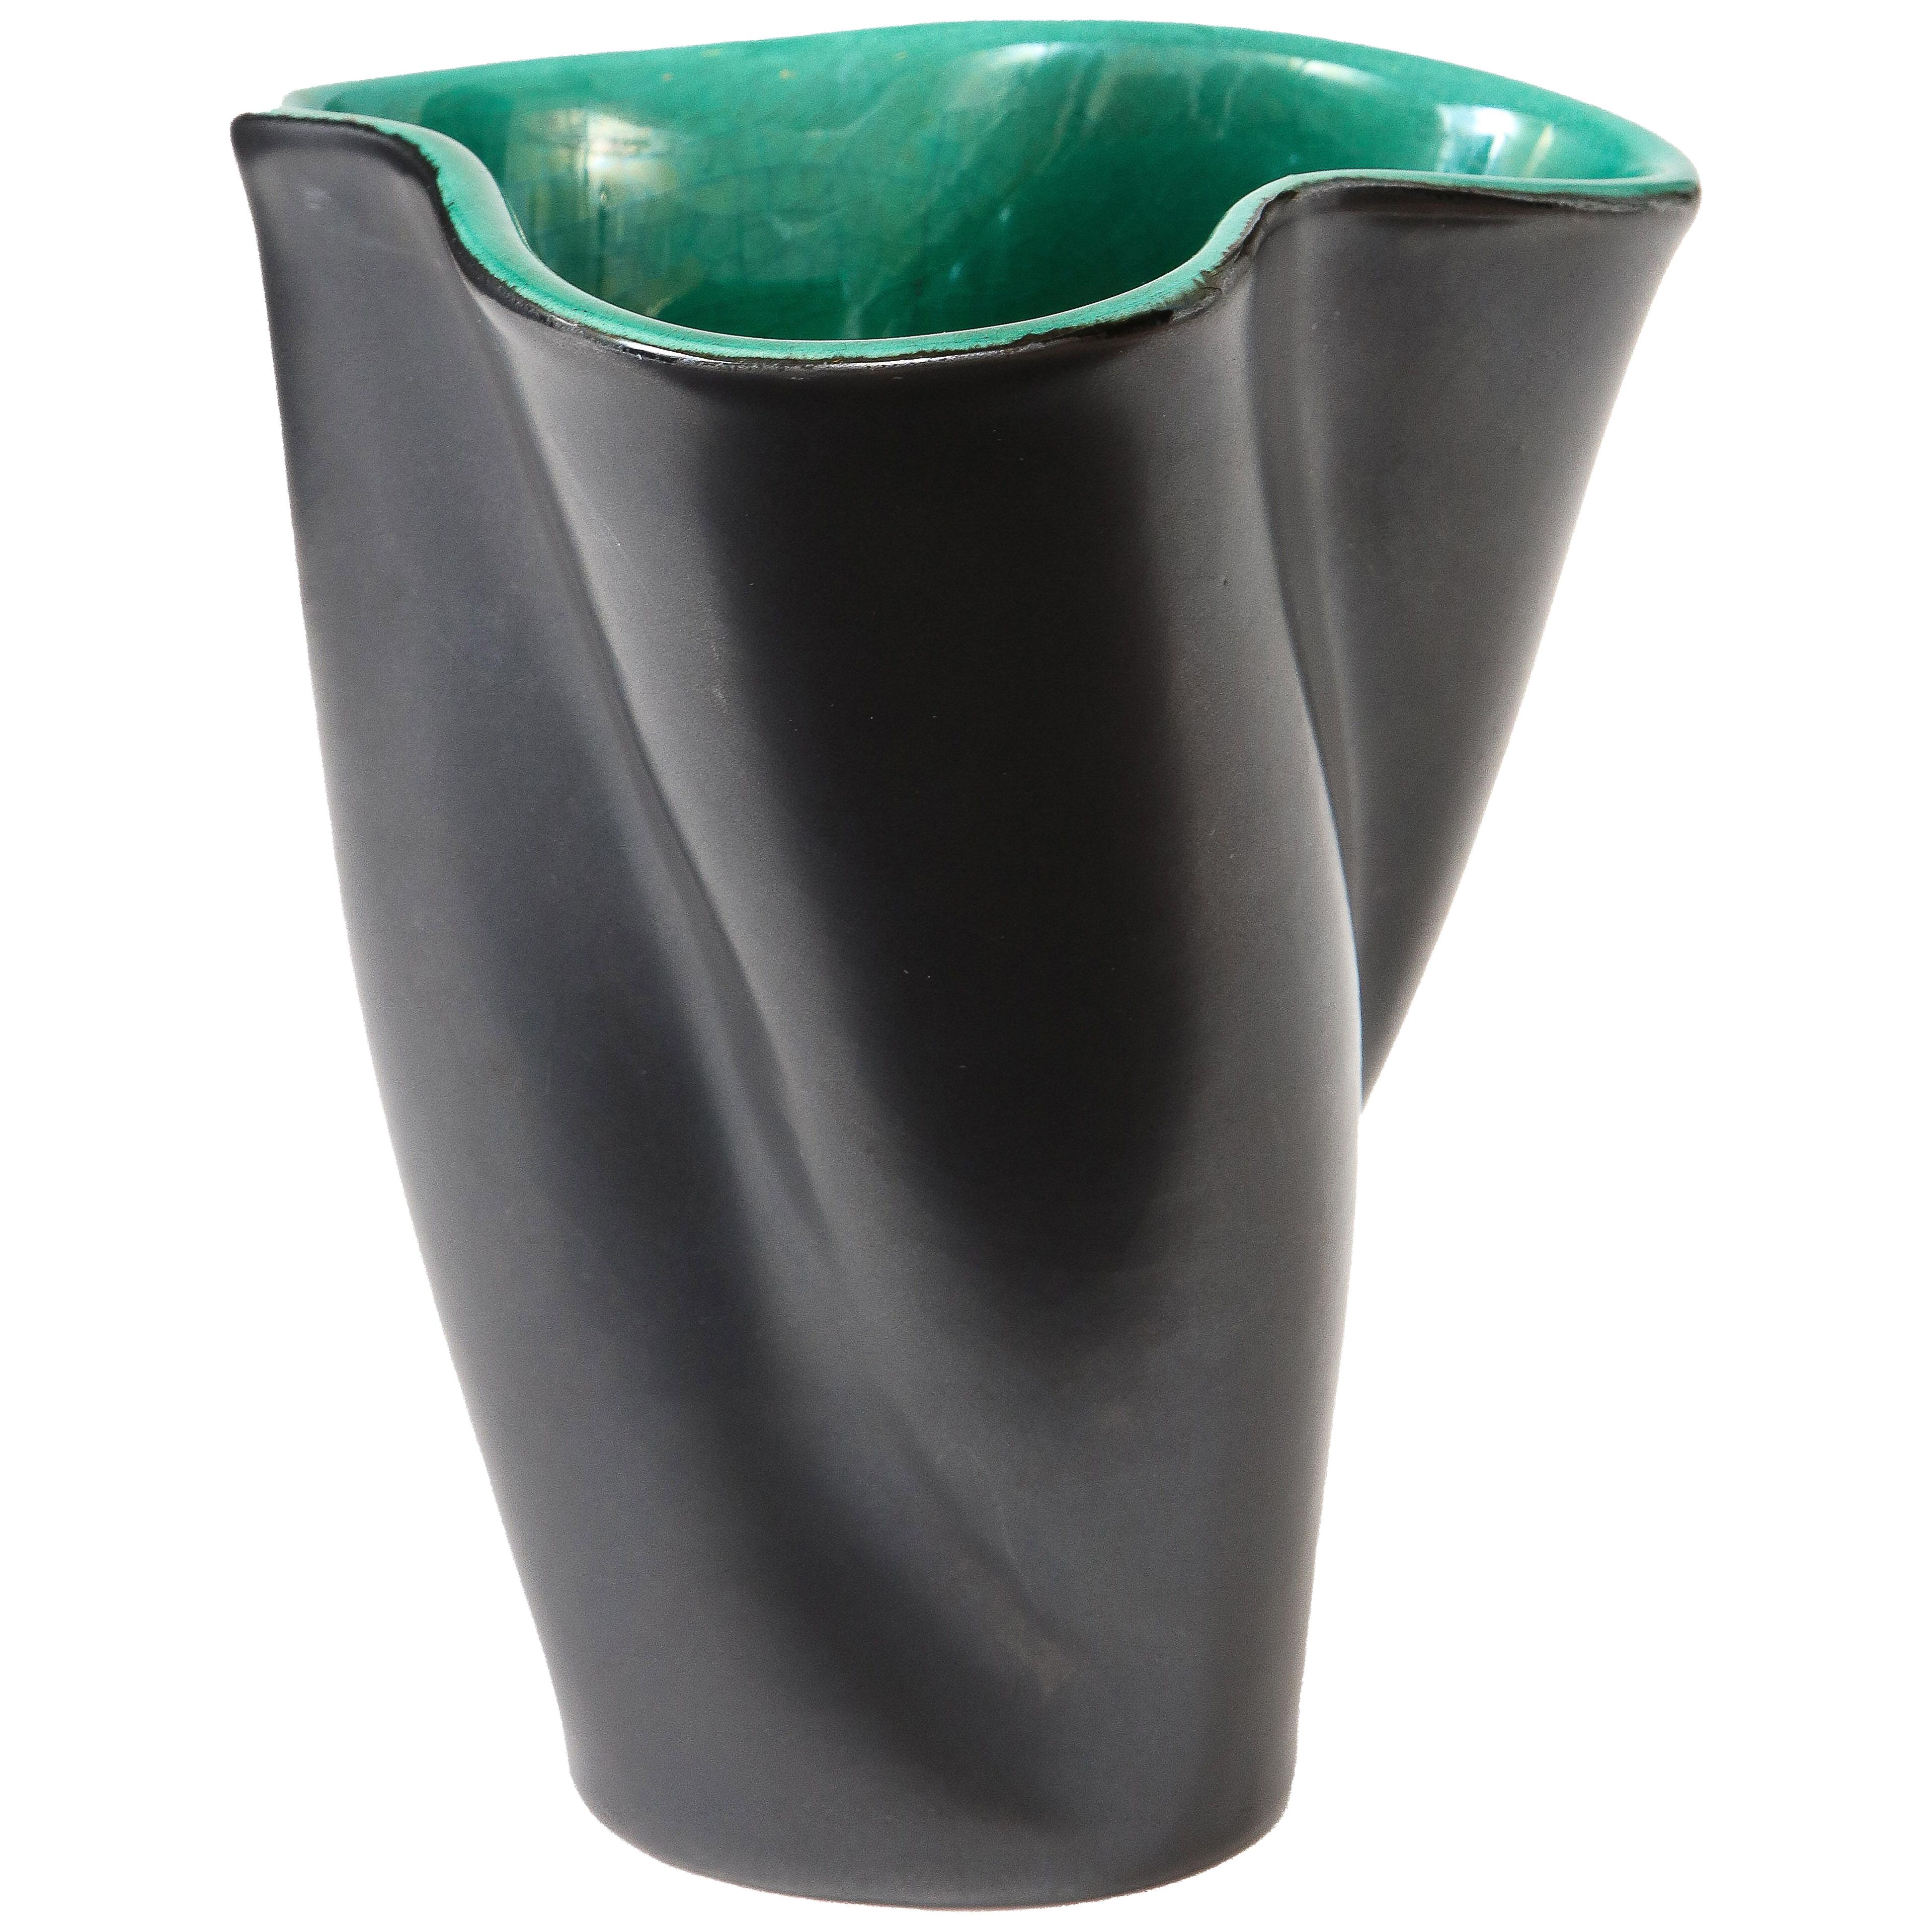 Elchinger Vase, Green Interrier Glaze, France. c. 1950’s, signed